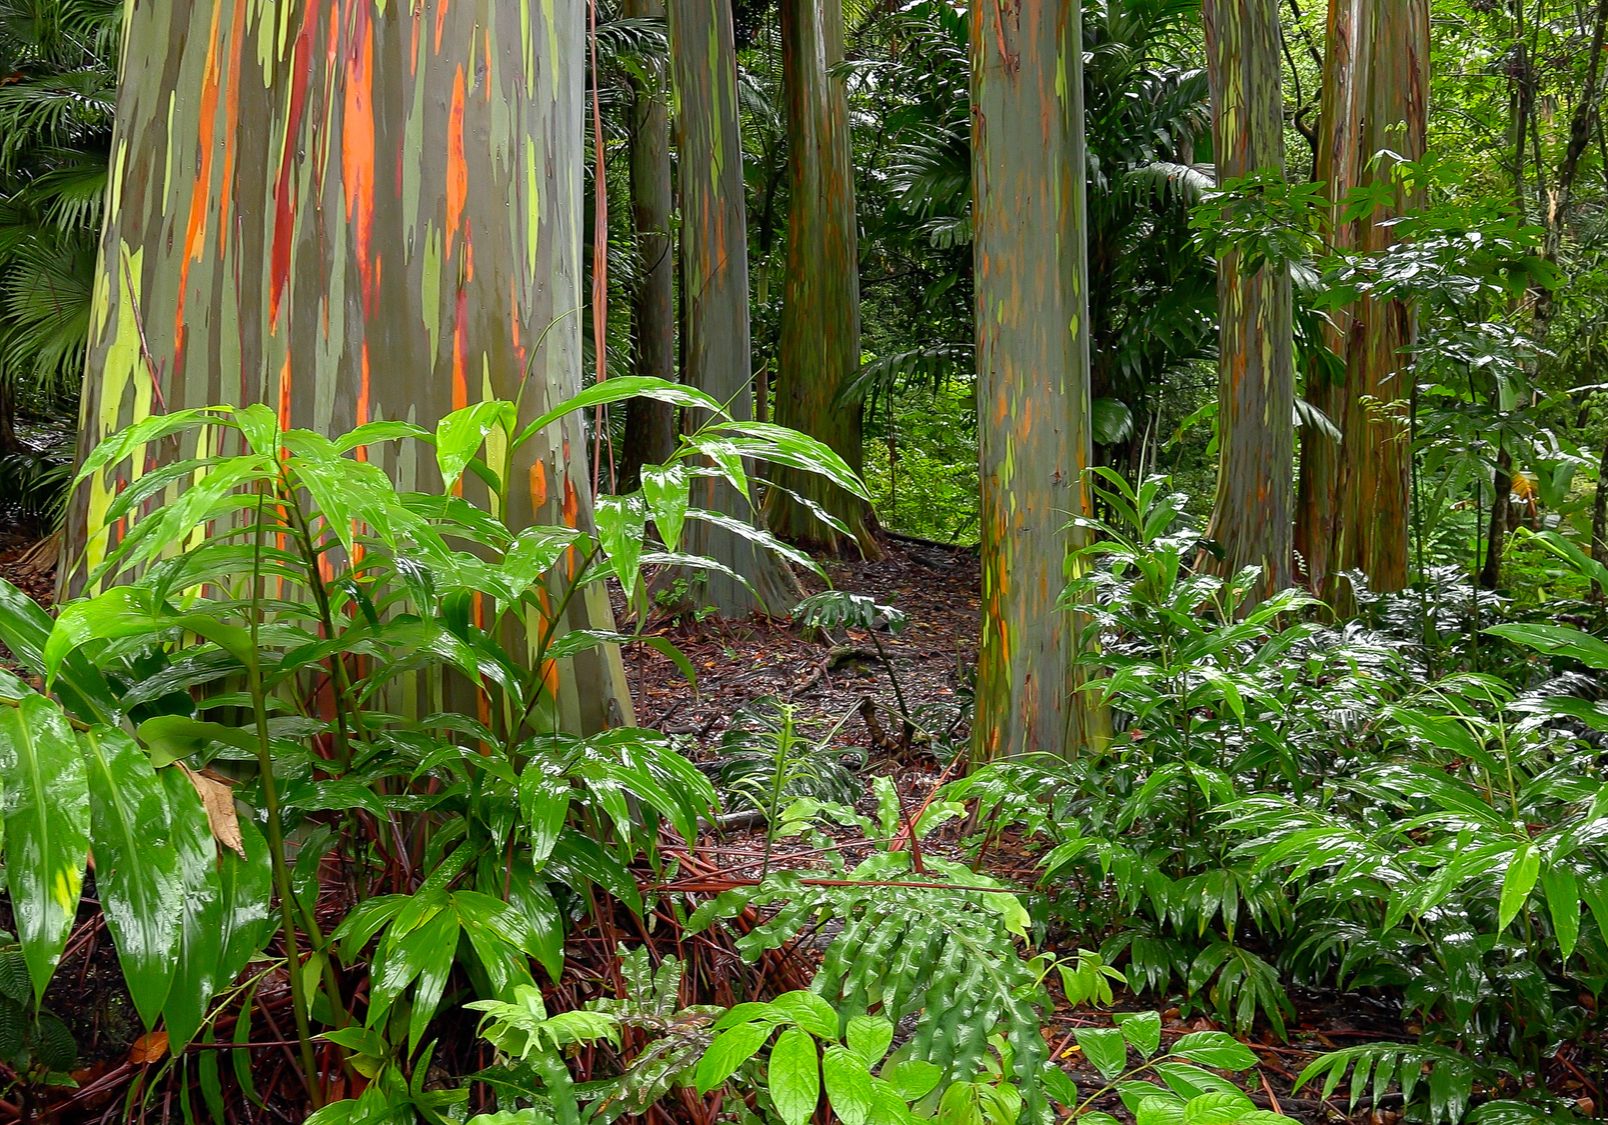 Colorful tree trunks of the Rainbow Eucalyptus (Eucalyptus deglupta) at the Keanae Arboretum along the road to Hana in Maui, Hawaii